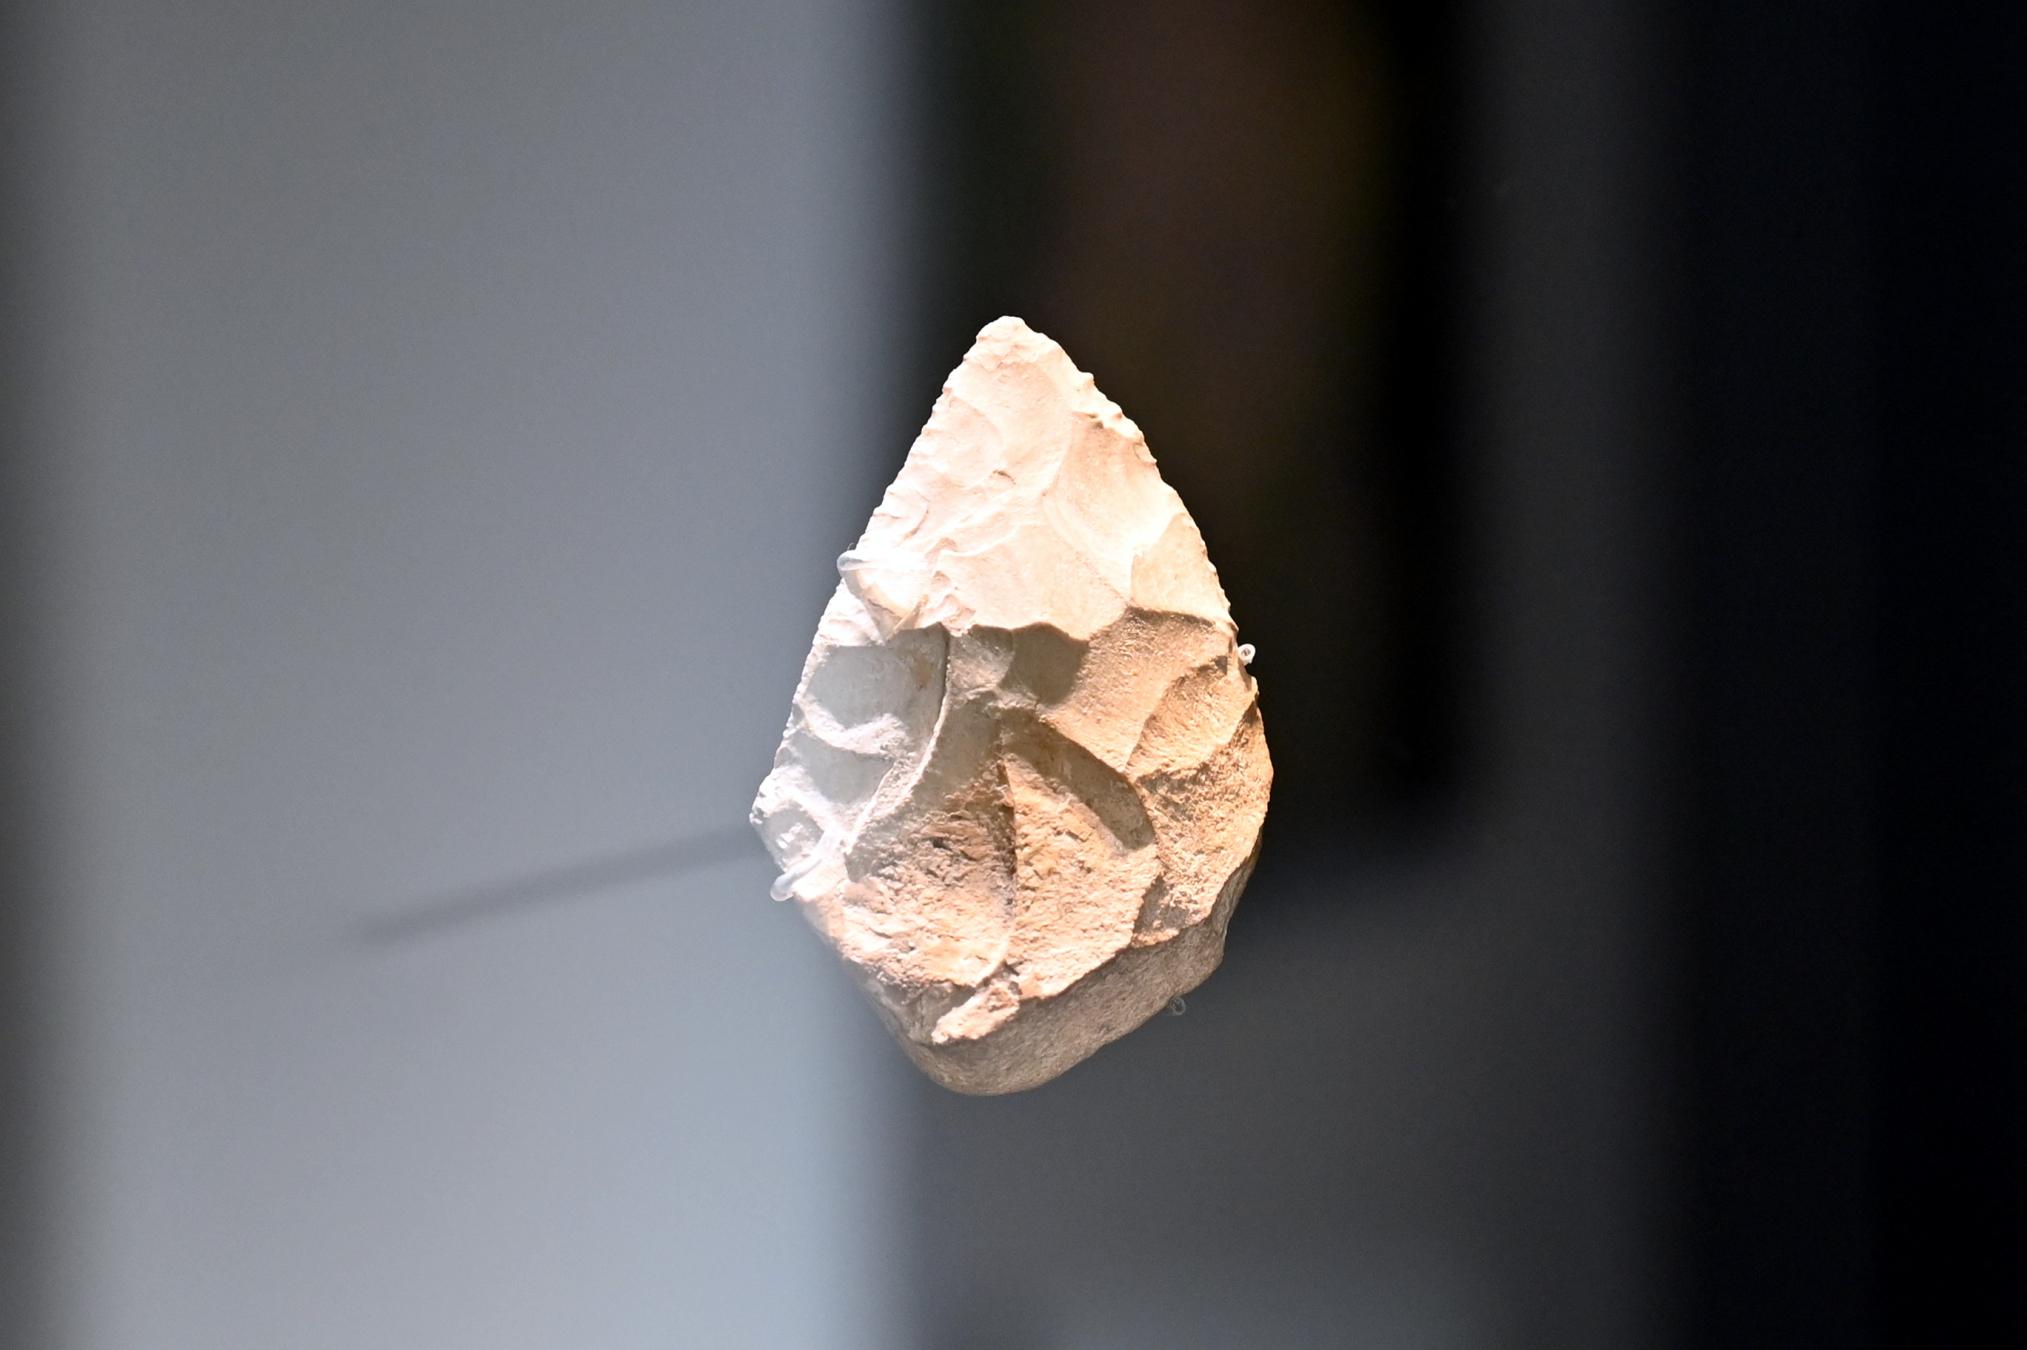 Kleiner Faustkeil, Paläolithikum, 600000 - 10000 v. Chr., 70000 - 50000 v. Chr., Bild 1/3